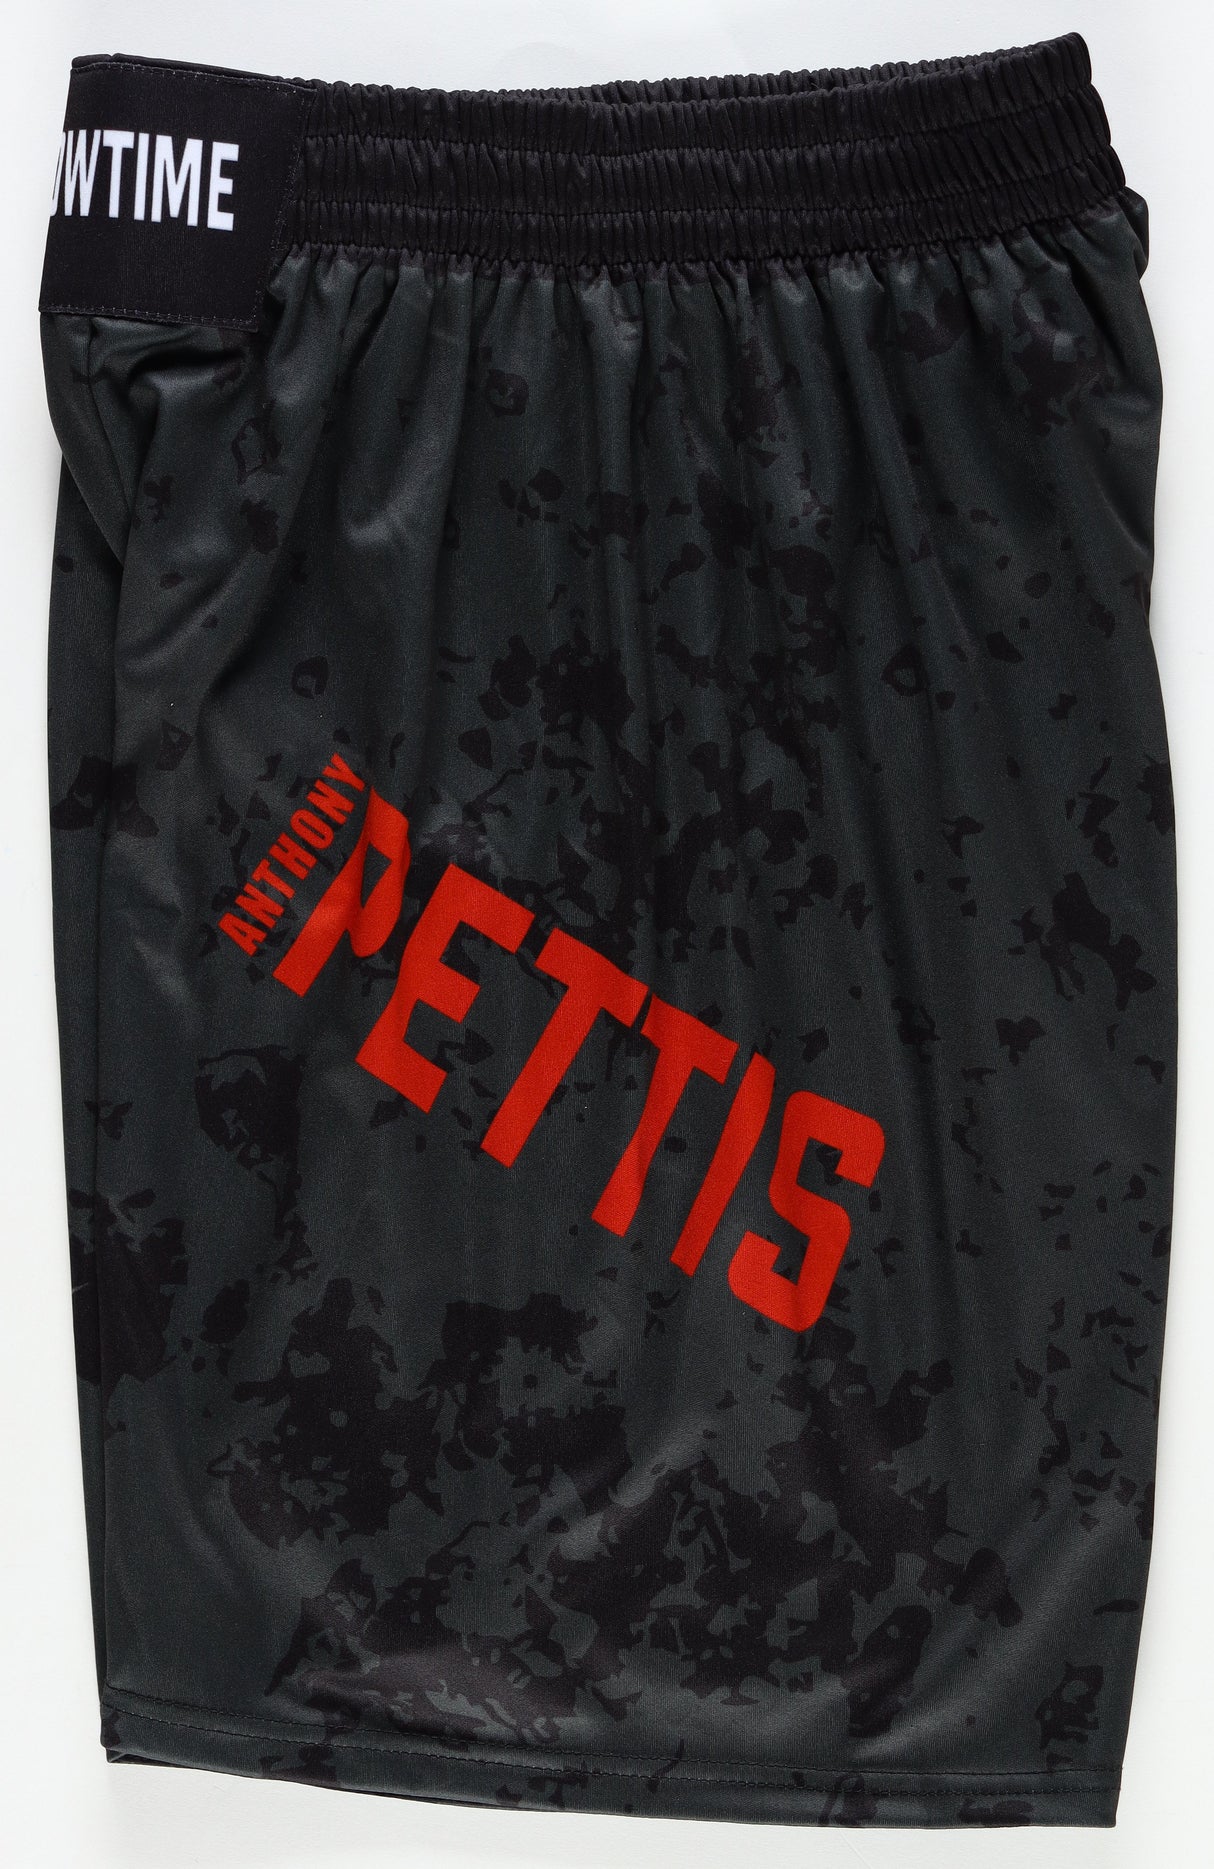 Anthony Pettis Signed UFC Fight Shorts (Beckett Witnessed)